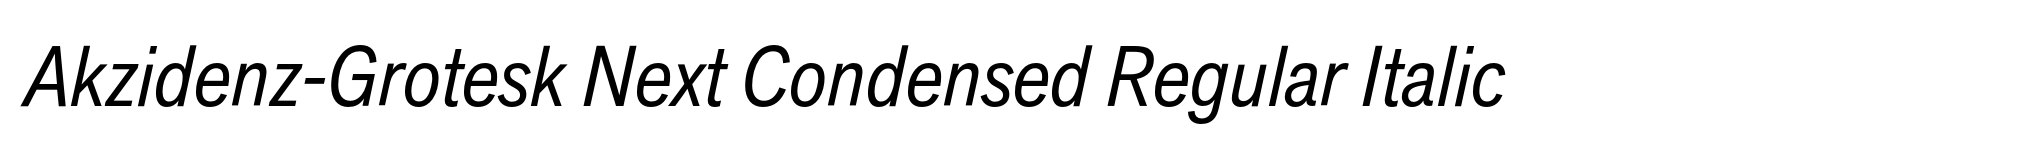 Akzidenz-Grotesk Next Condensed Regular Italic image